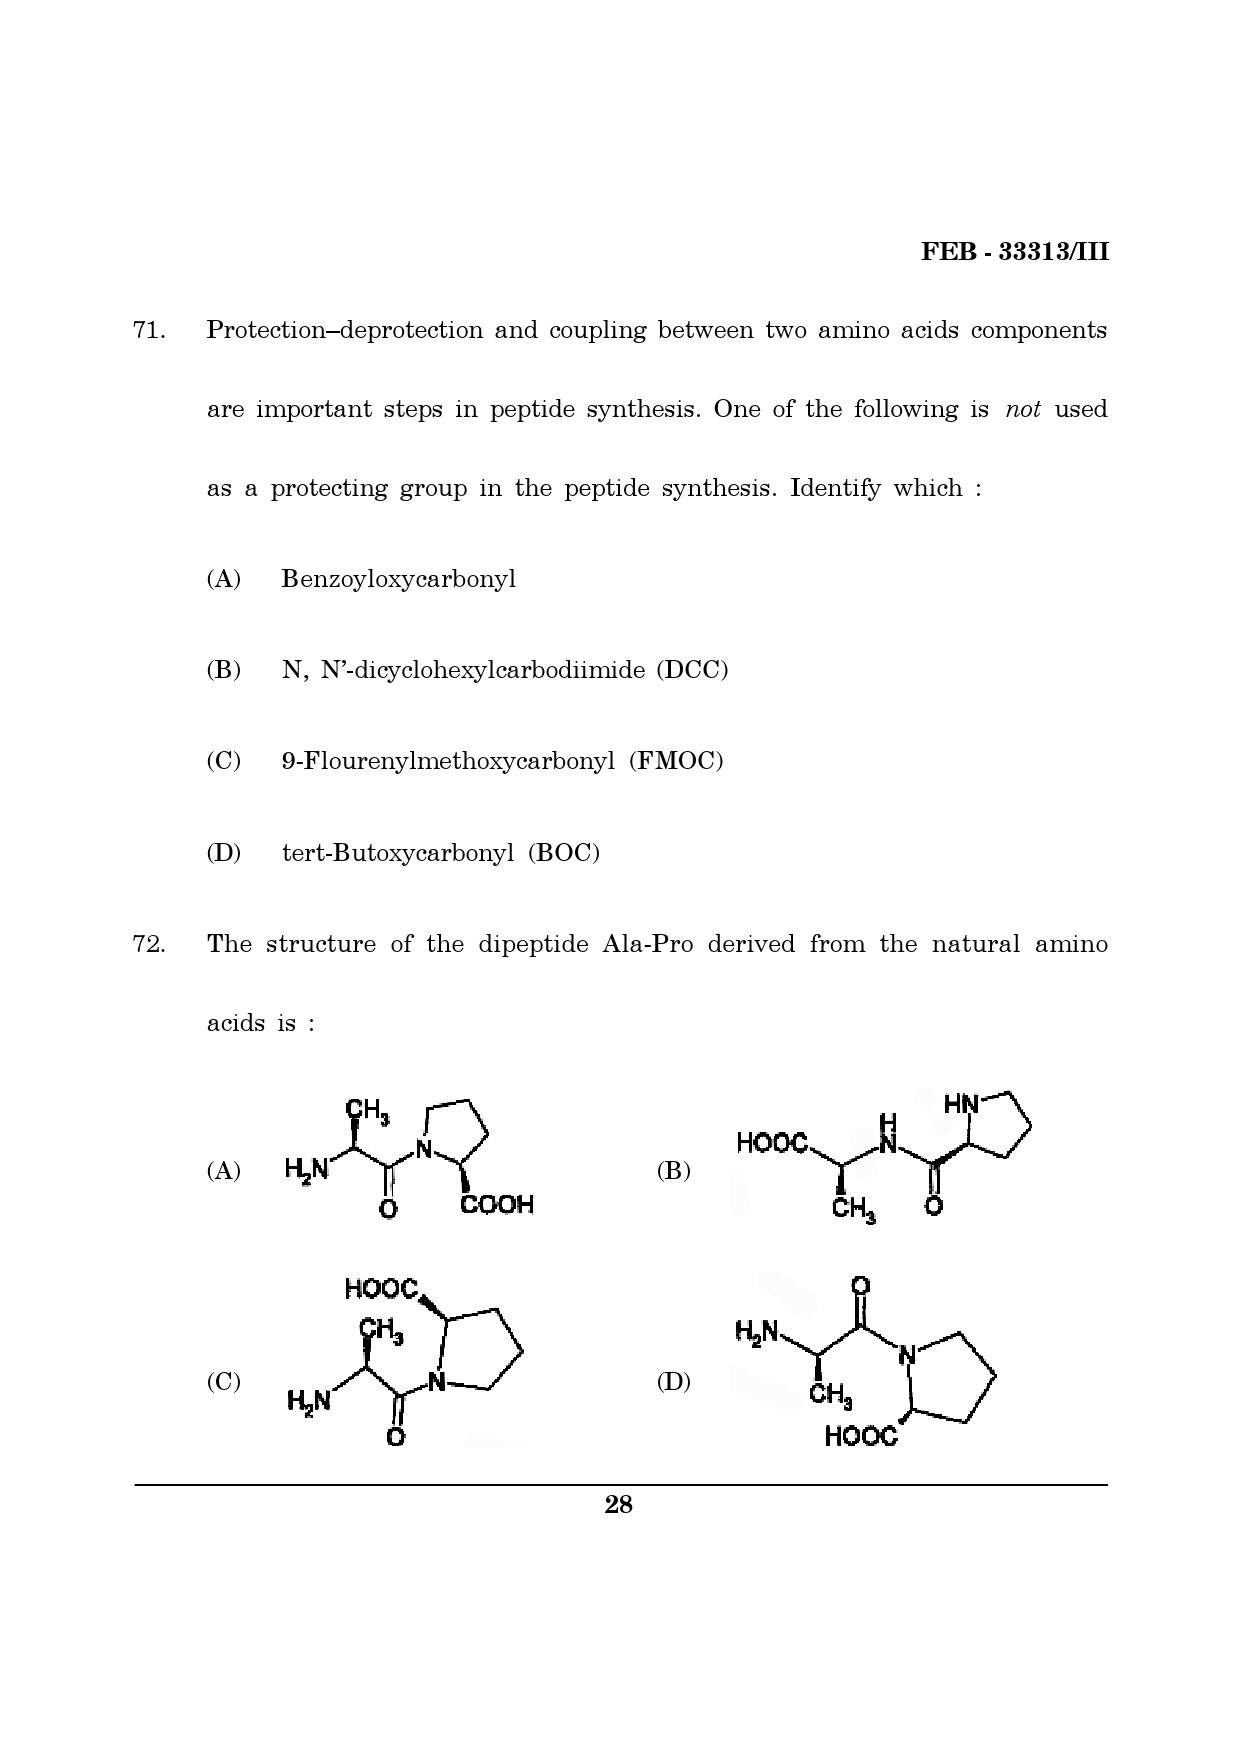 Maharashtra SET Chemical Sciences Question Paper III February 2013 28